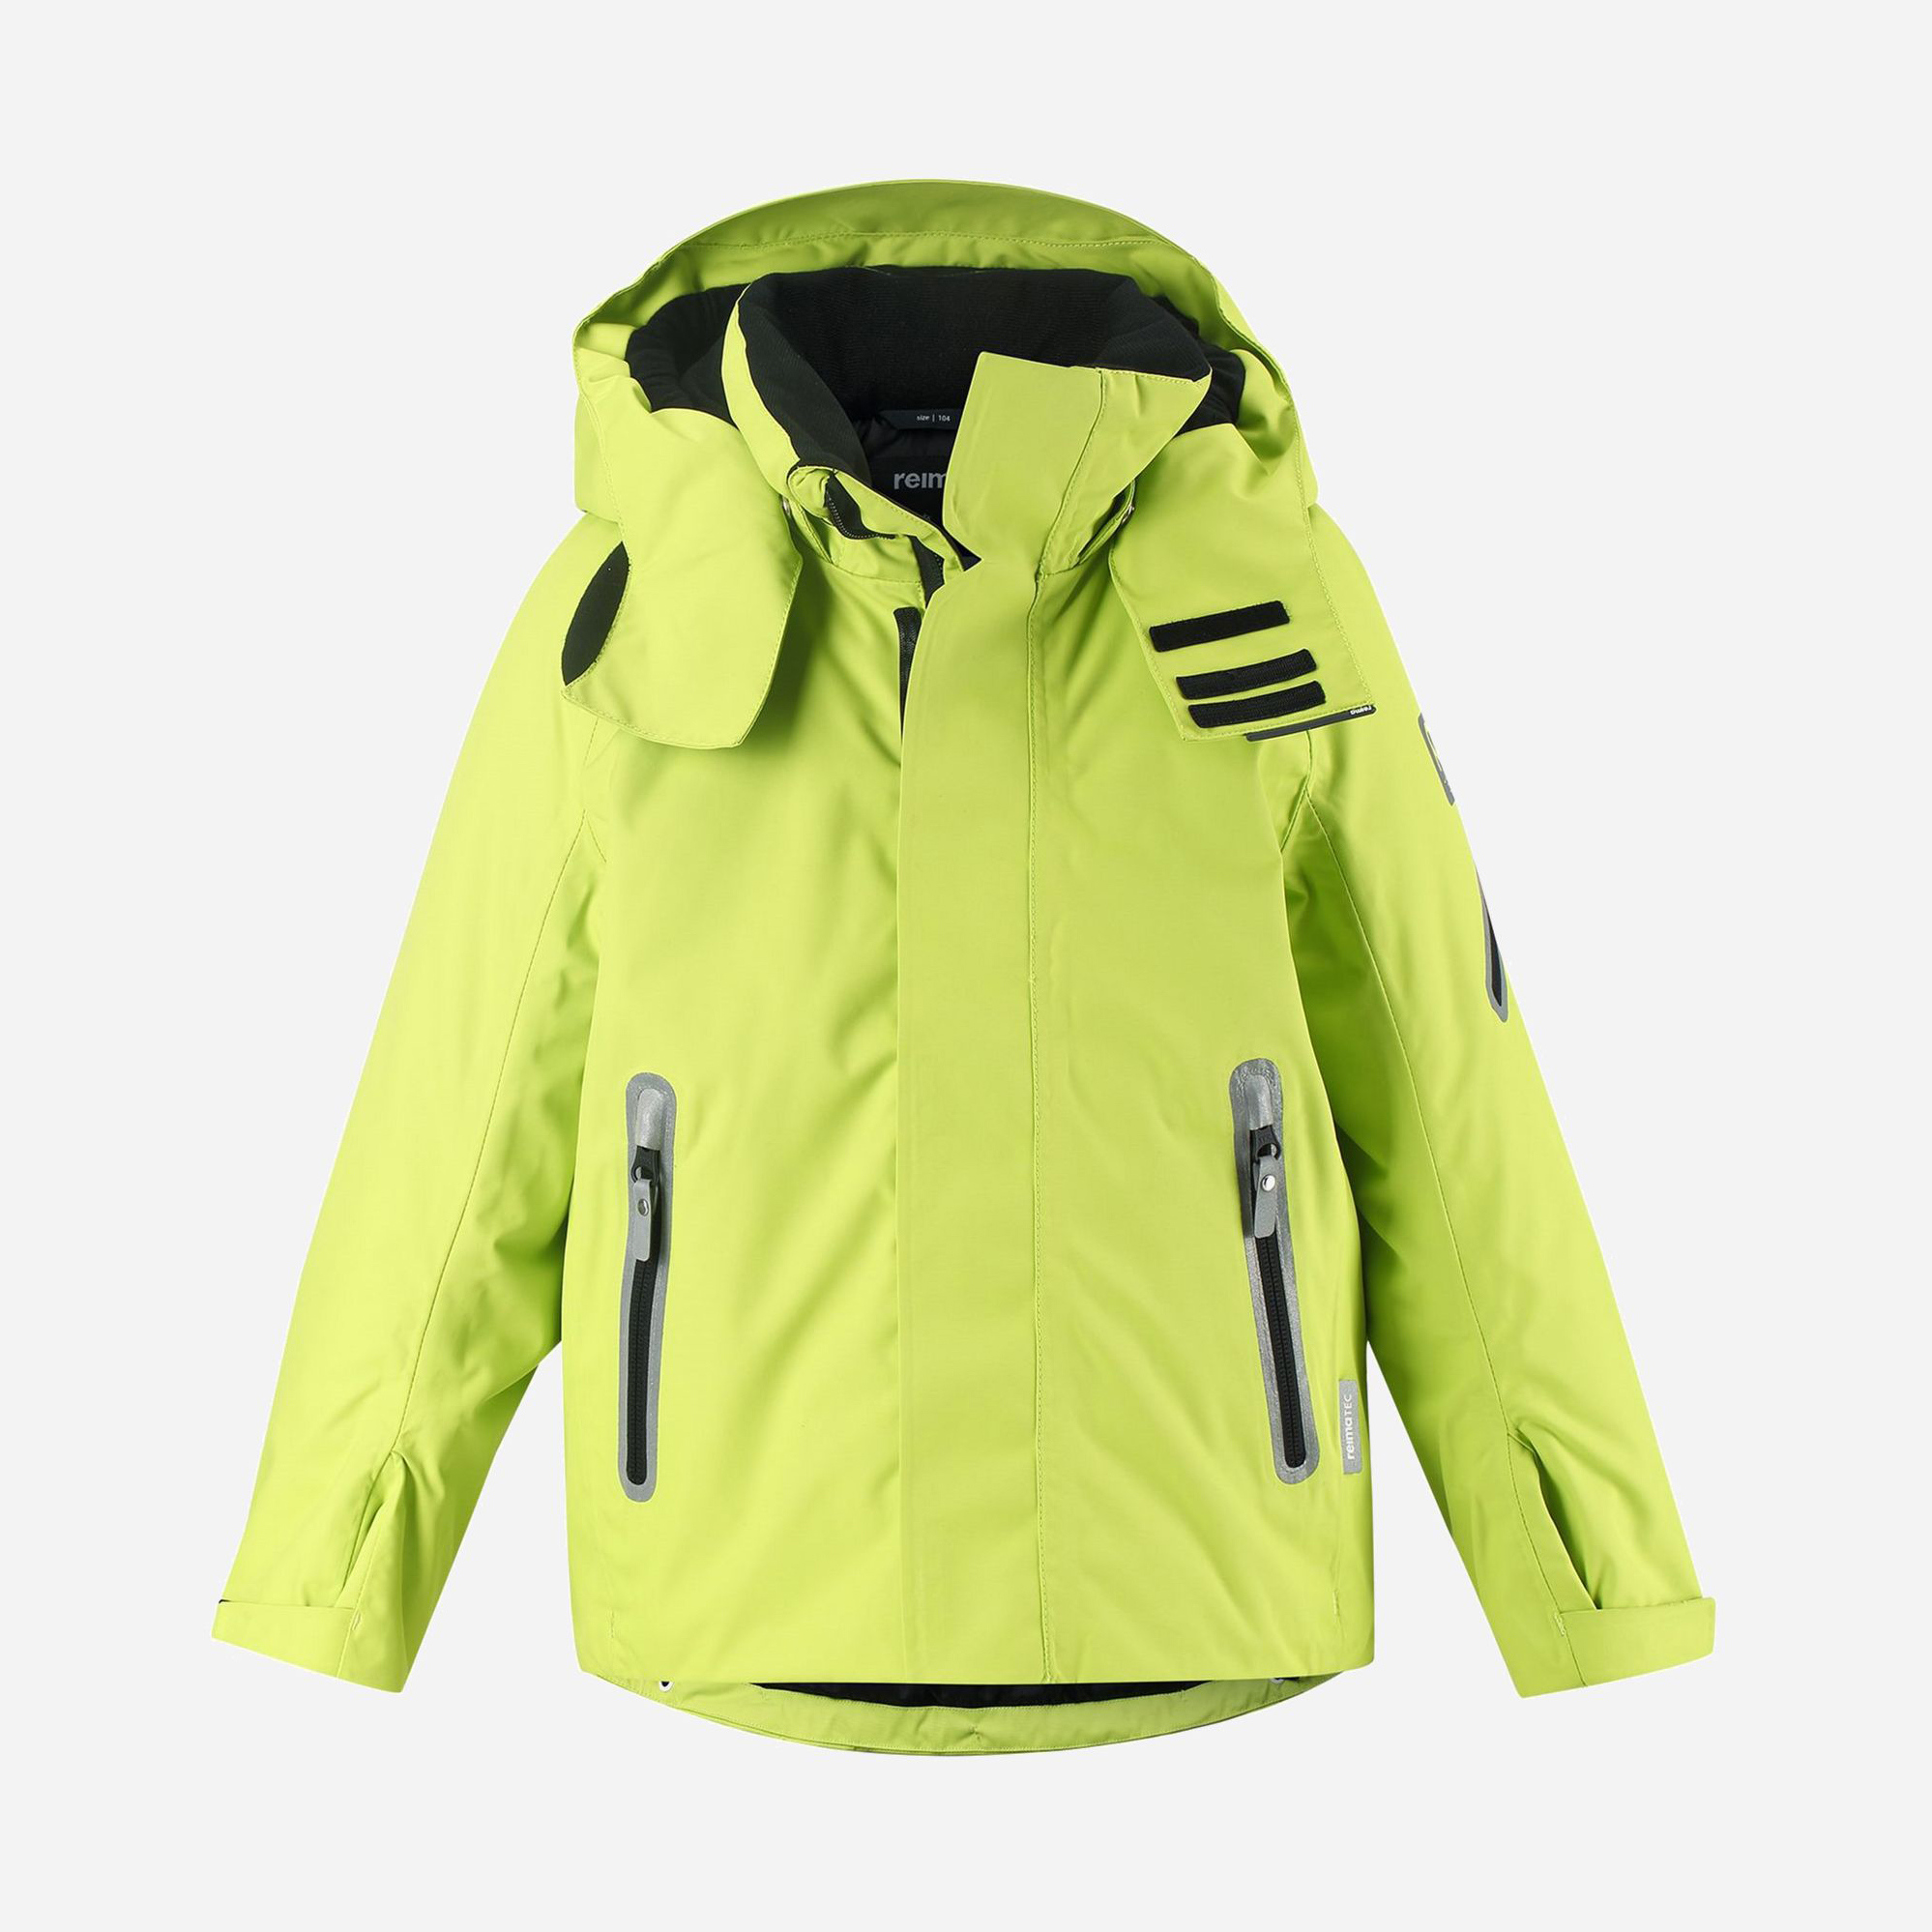 Акция на Дитяча зимова термо куртка для хлопчика Reima Regor 521615A-8350 98 см Салатова от Rozetka